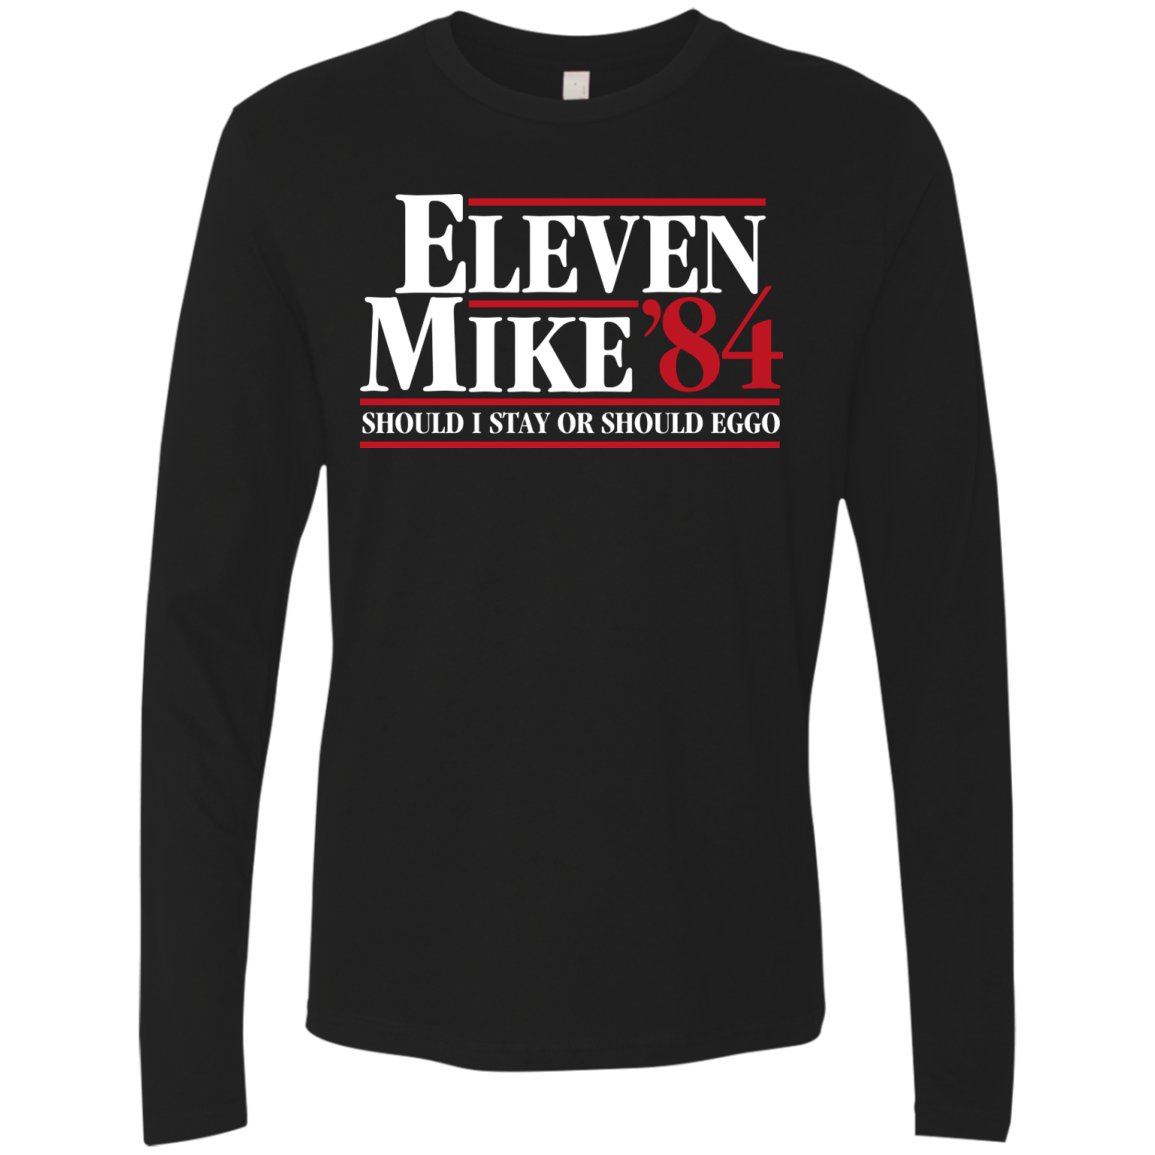 Eleven Mike 84 - Should I Stay or Should Eggo Men's Premium Long Sleeve